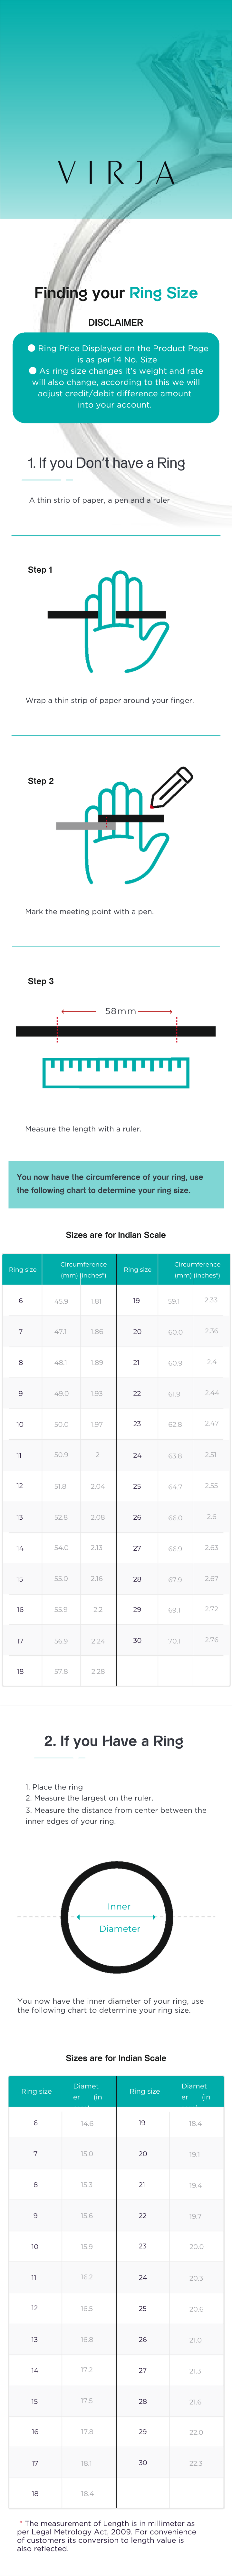 Virja Ring Size Guide